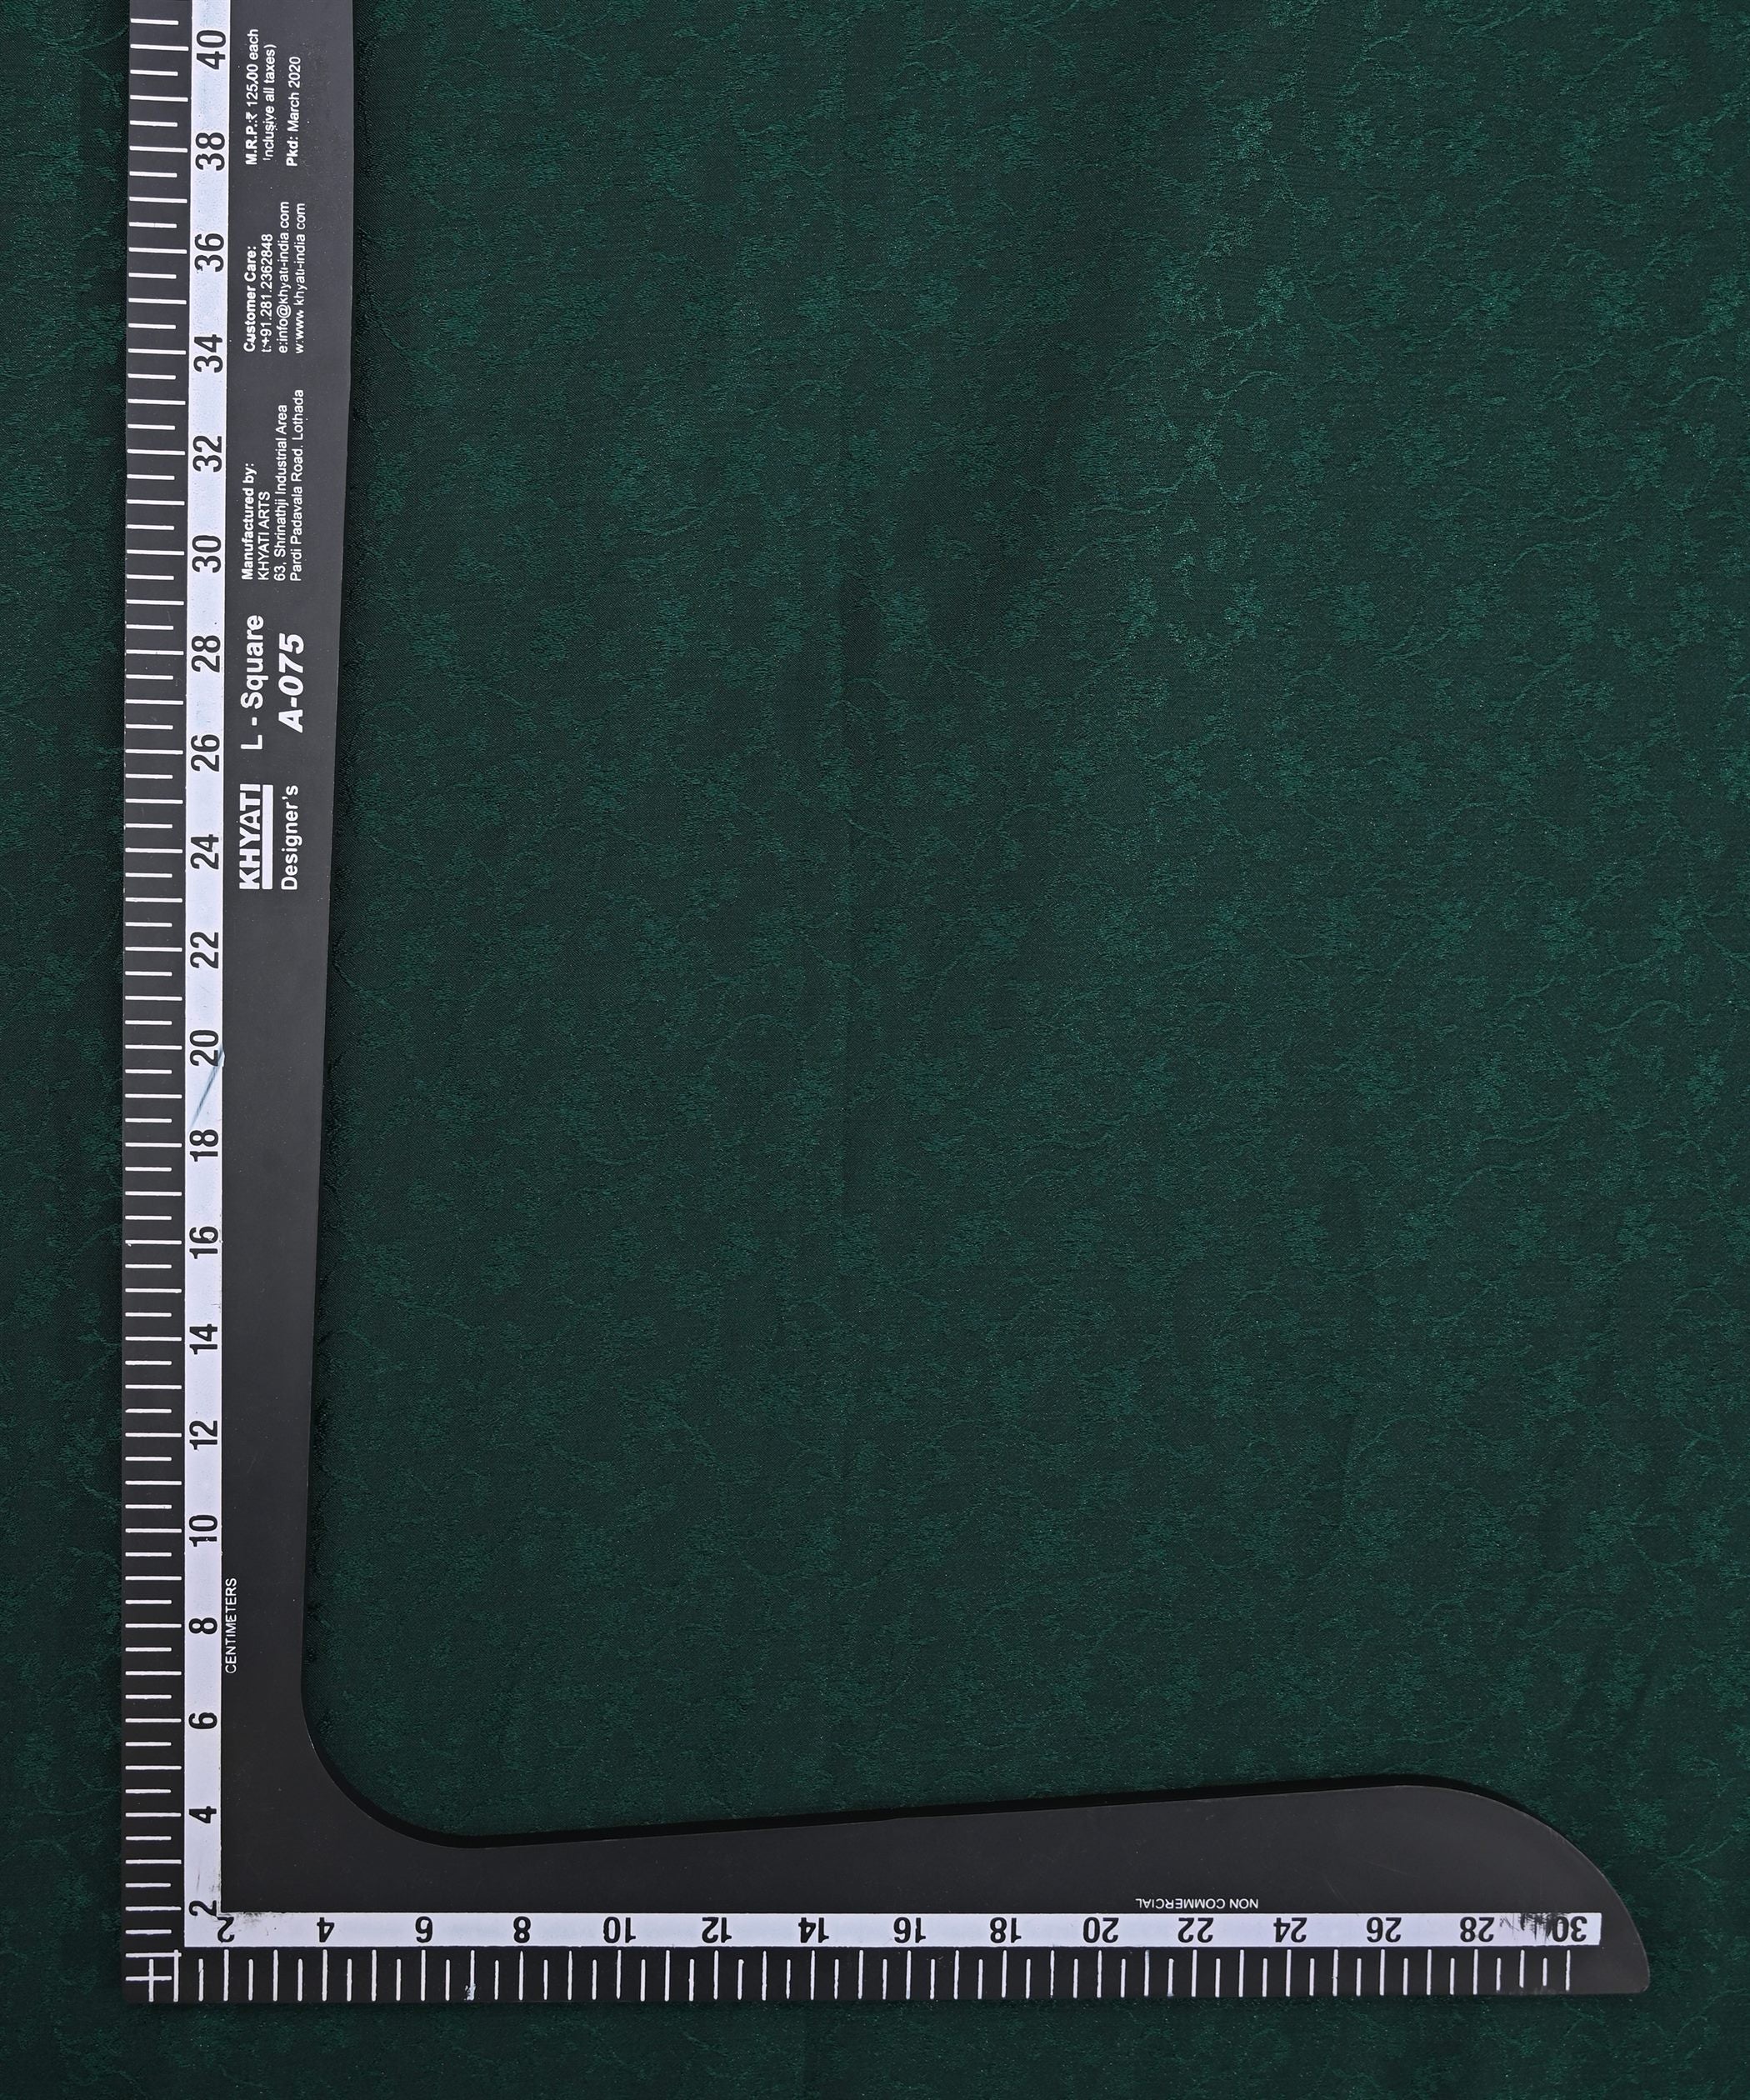 Dark Green Bright Chiffon Fabric with Jacquard-1